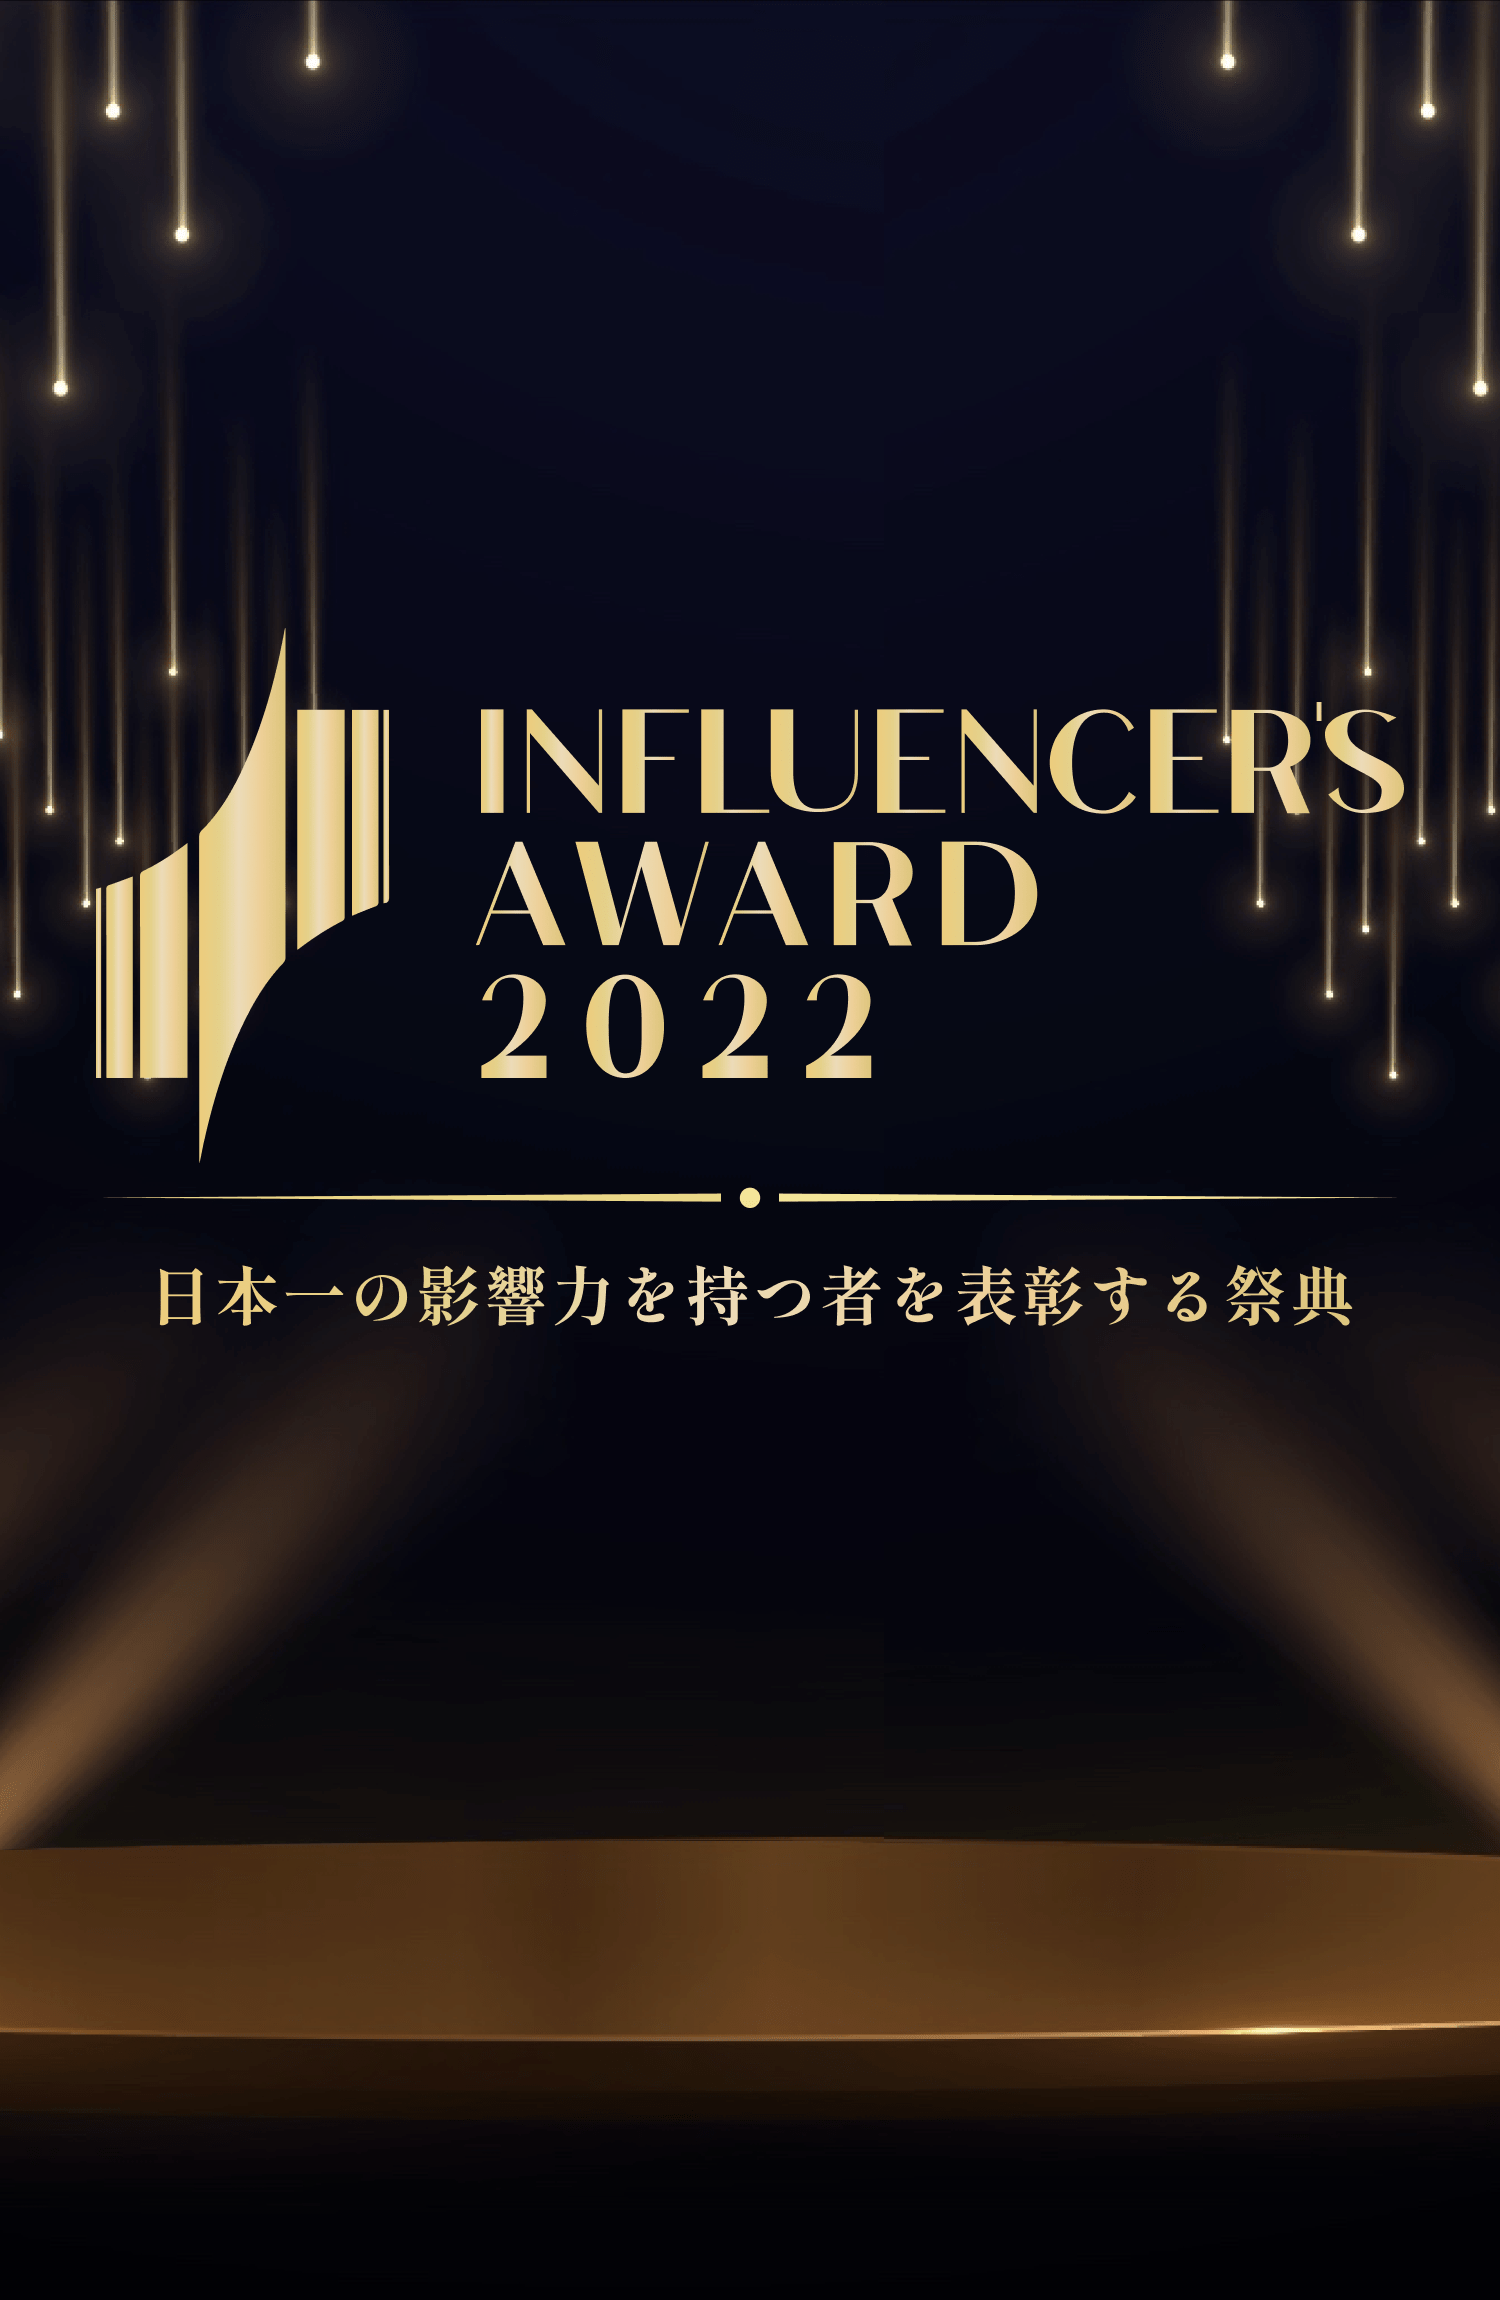 Influencer’s Award 2022 日本一の影響力を持つ者を表彰する祭典